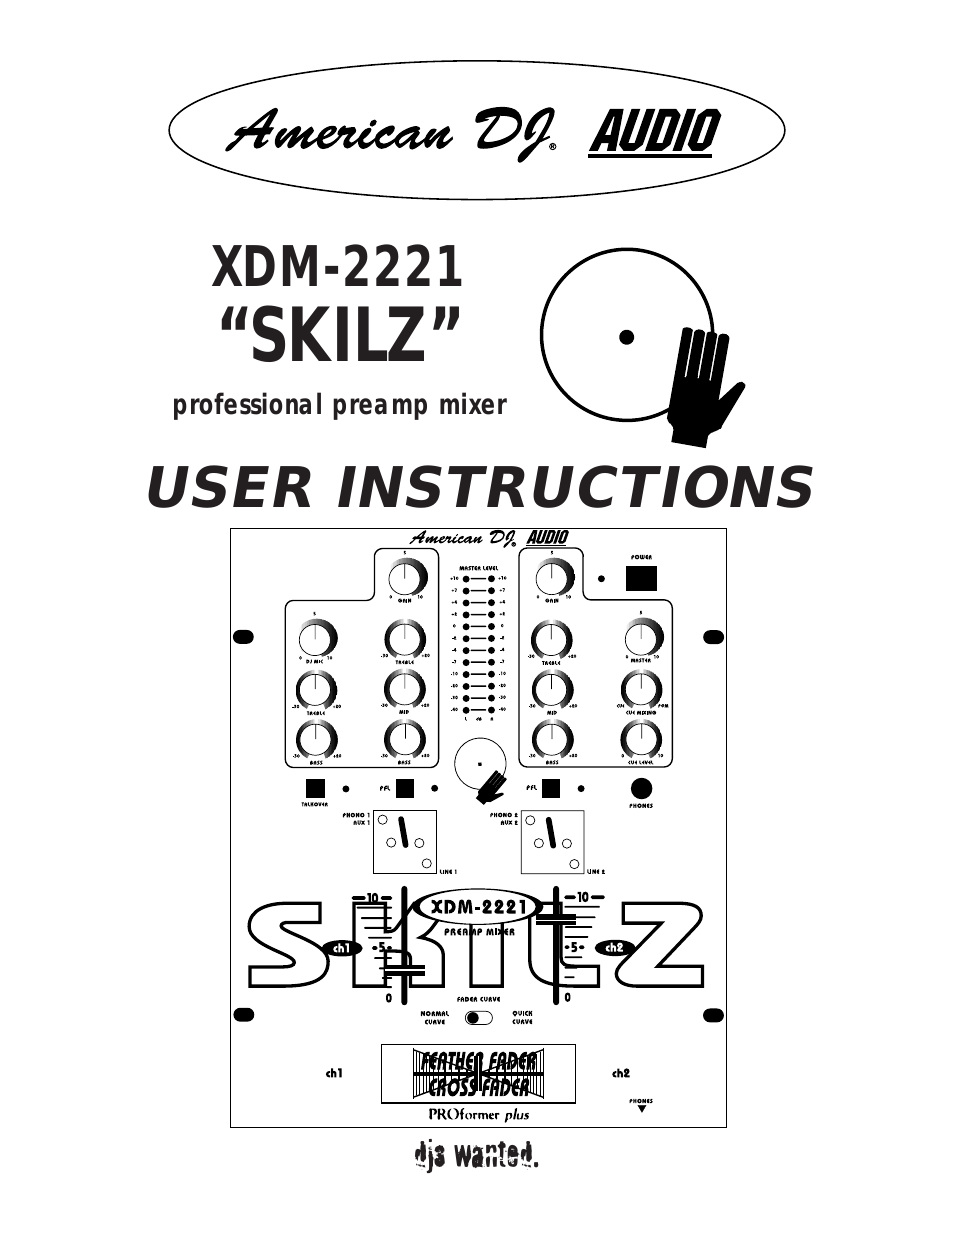 SKILZ XDM-2221